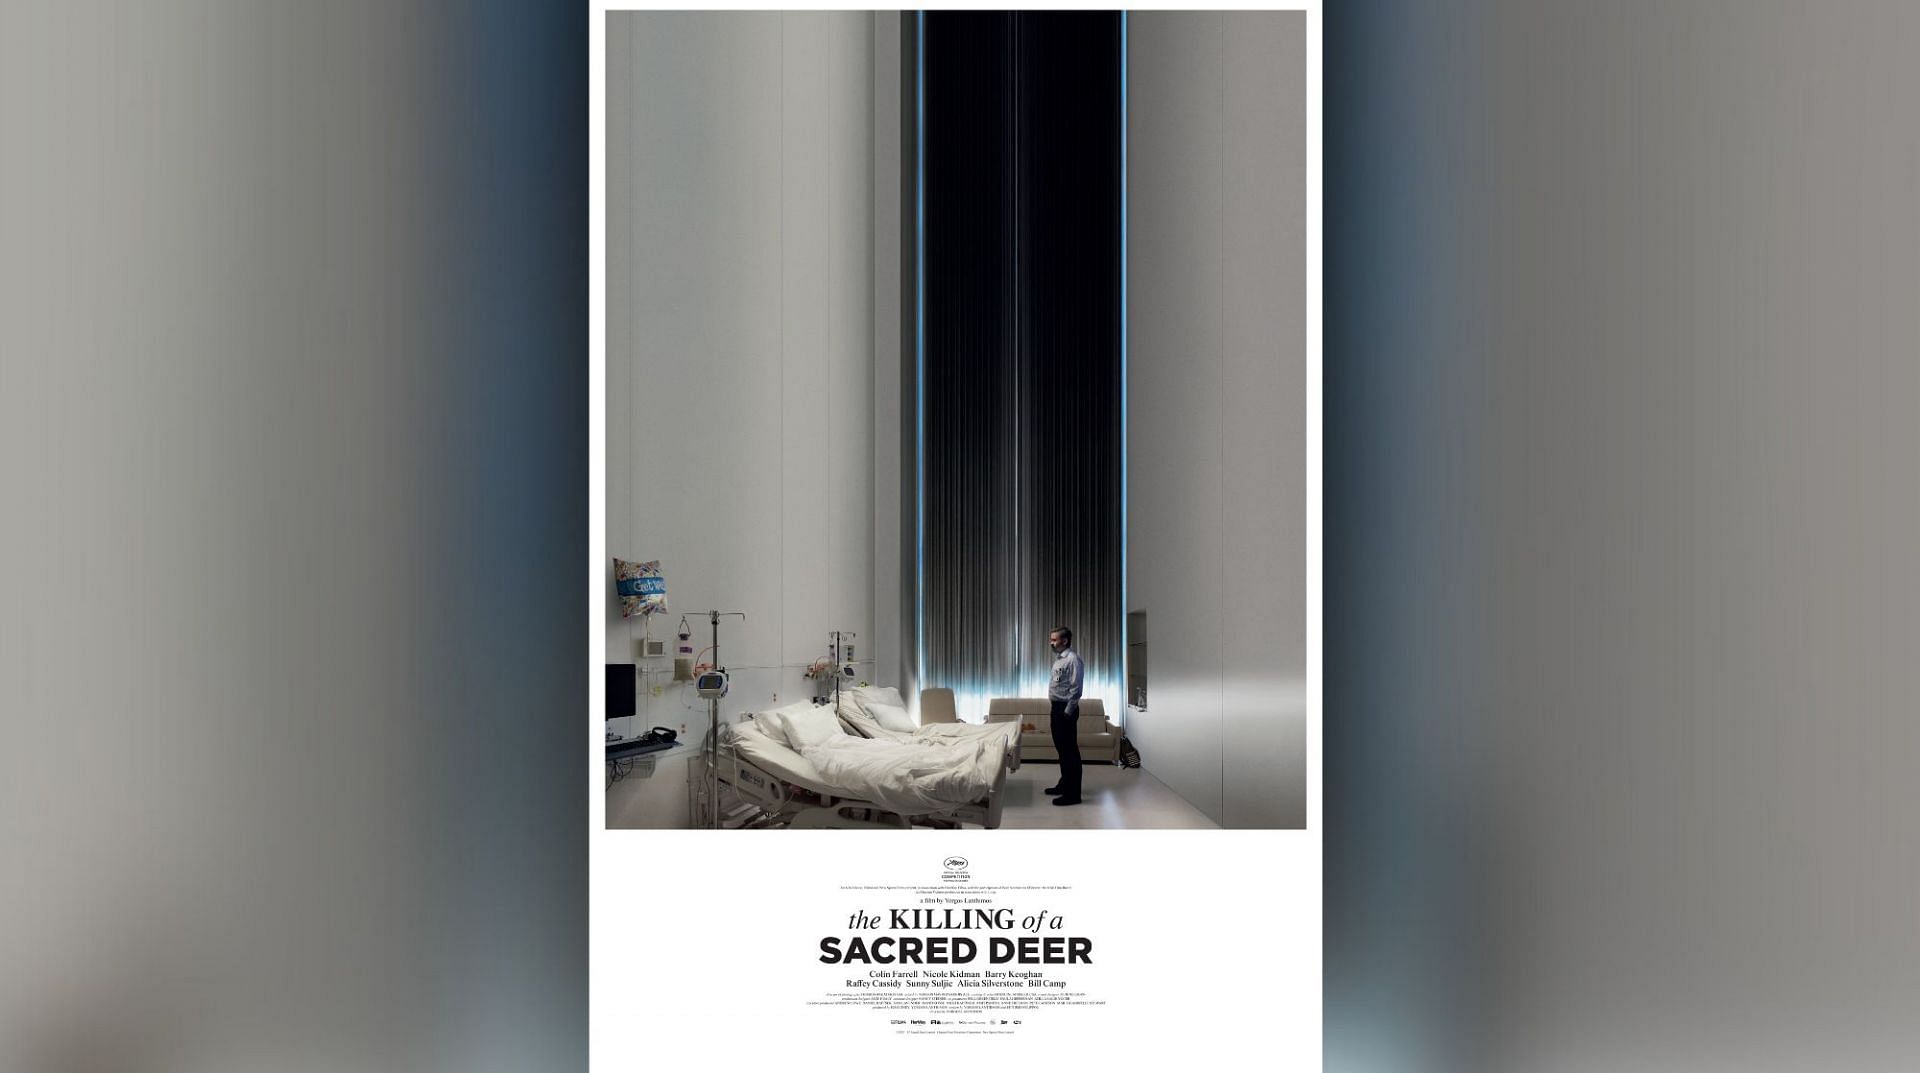 The Killing of a Sacred Deer (Image via A24)